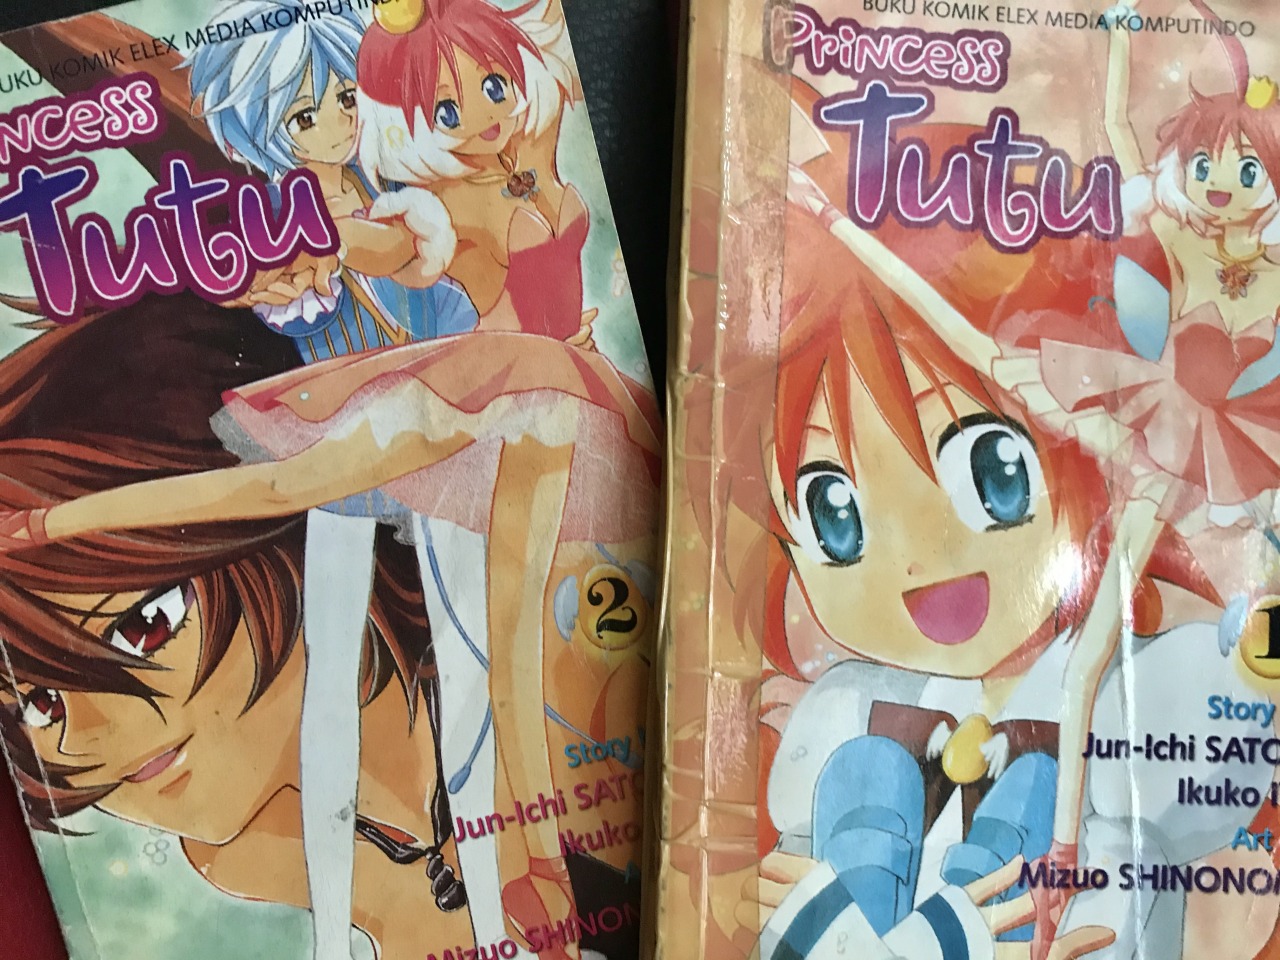 Princess tutu manga